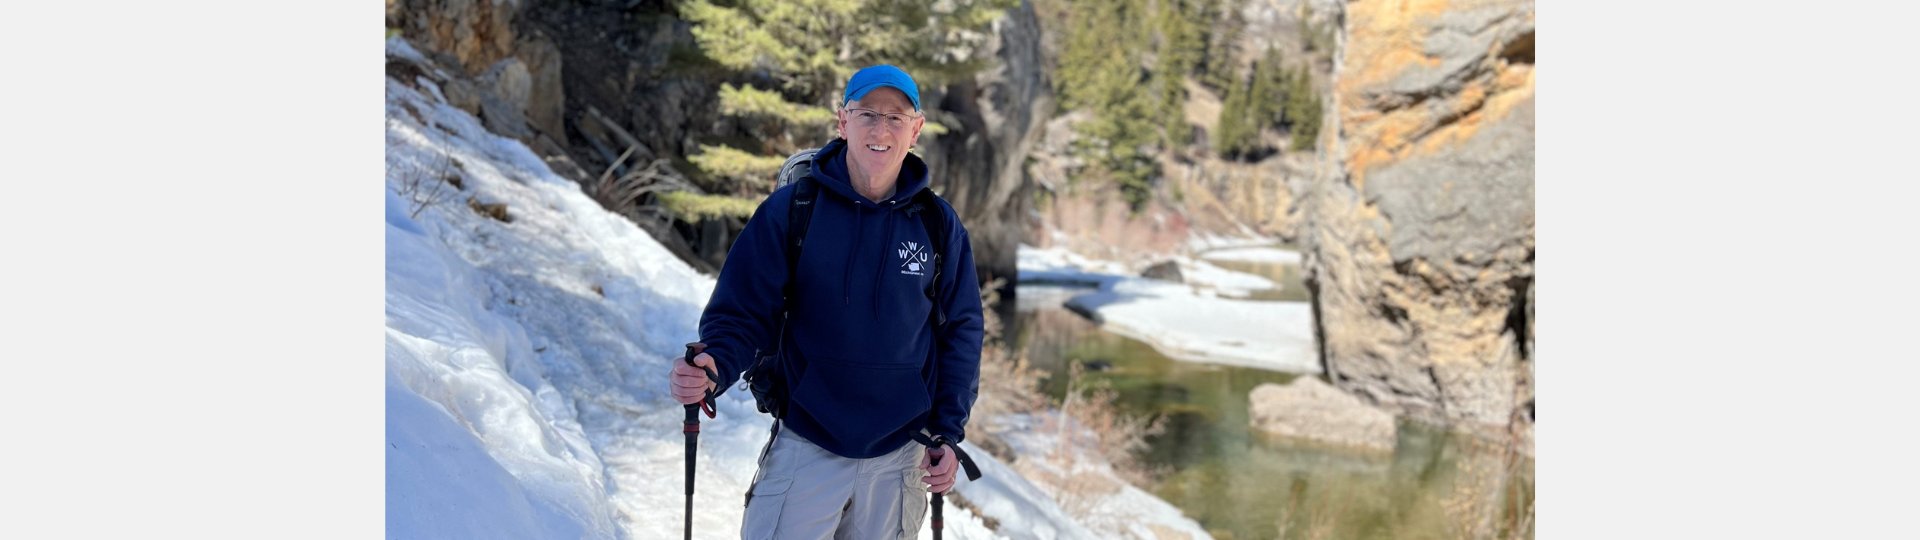 audiologist Jeff Williamson hiking in Montana